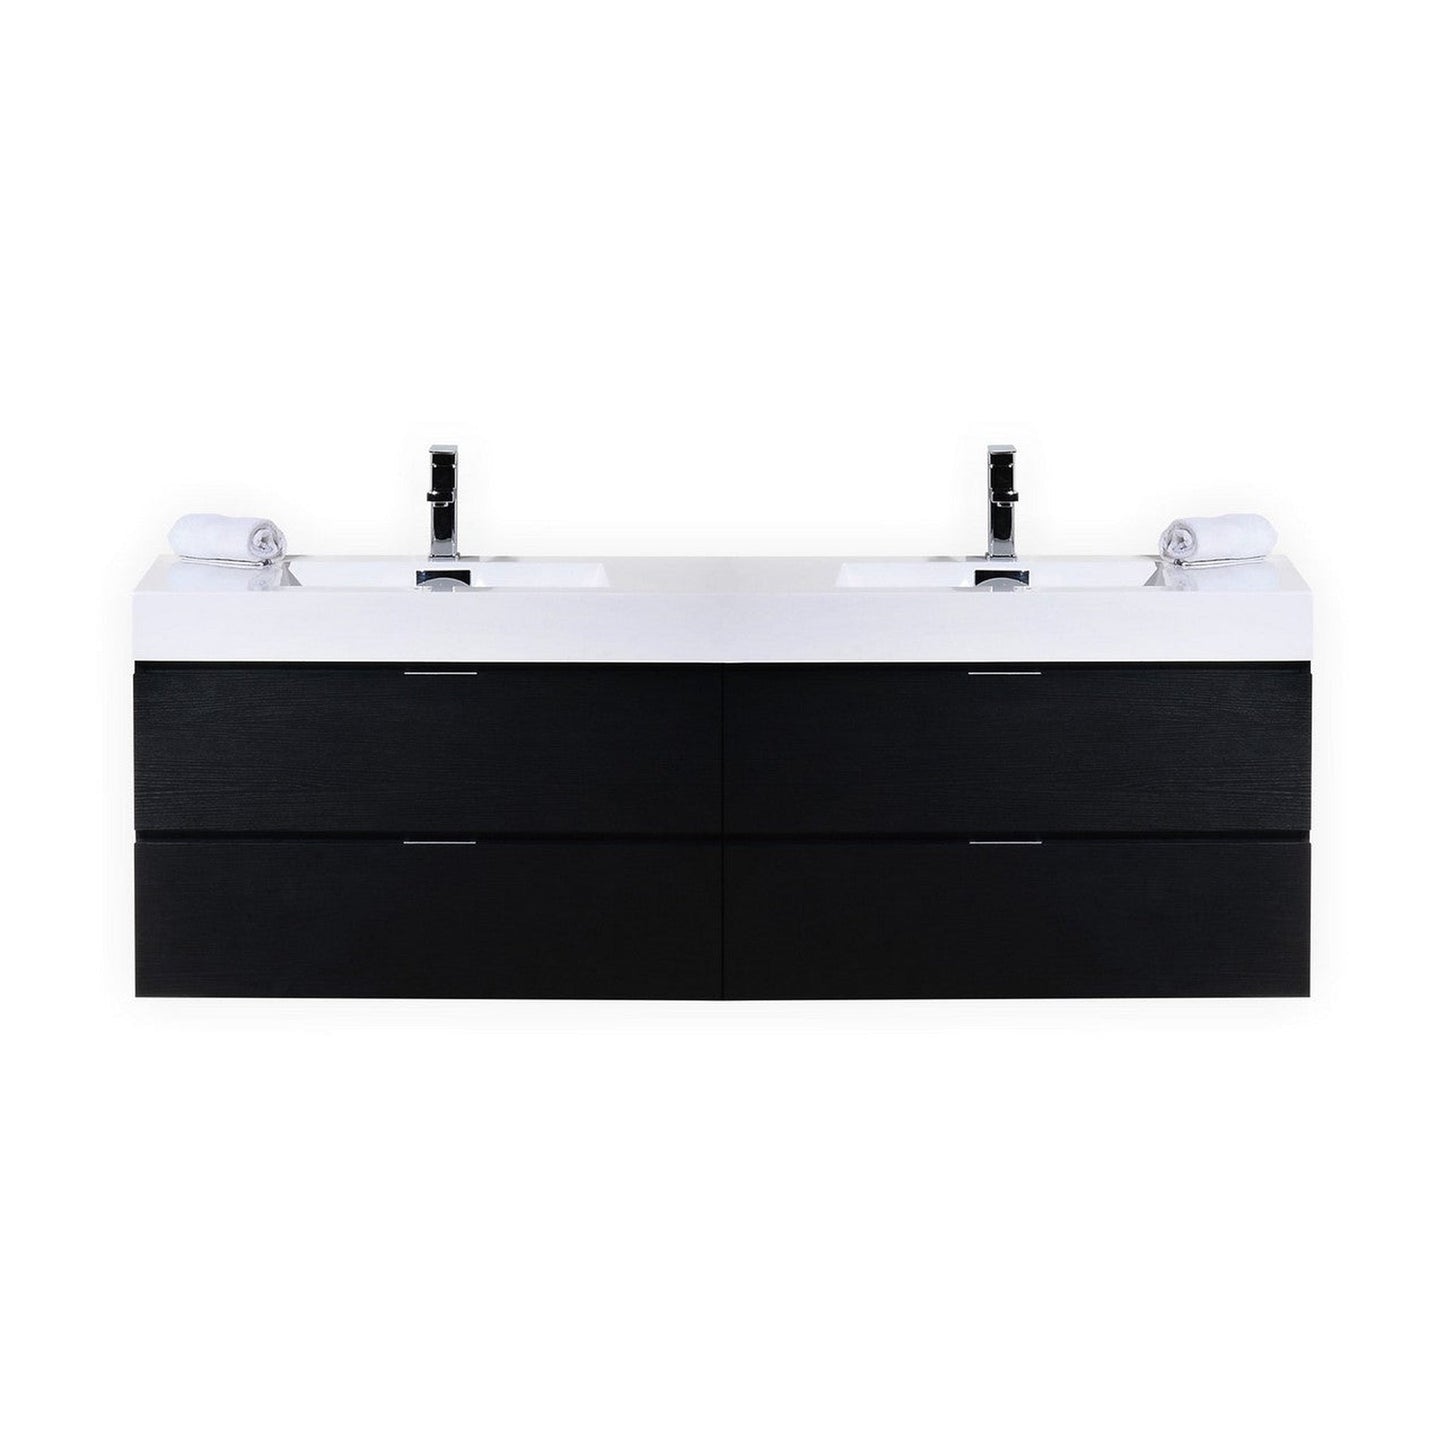 KubeBath Bliss 72" Black Wall-Mounted Modern Bathroom Vanity With Double Integrated Acrylic Sink With Overflow